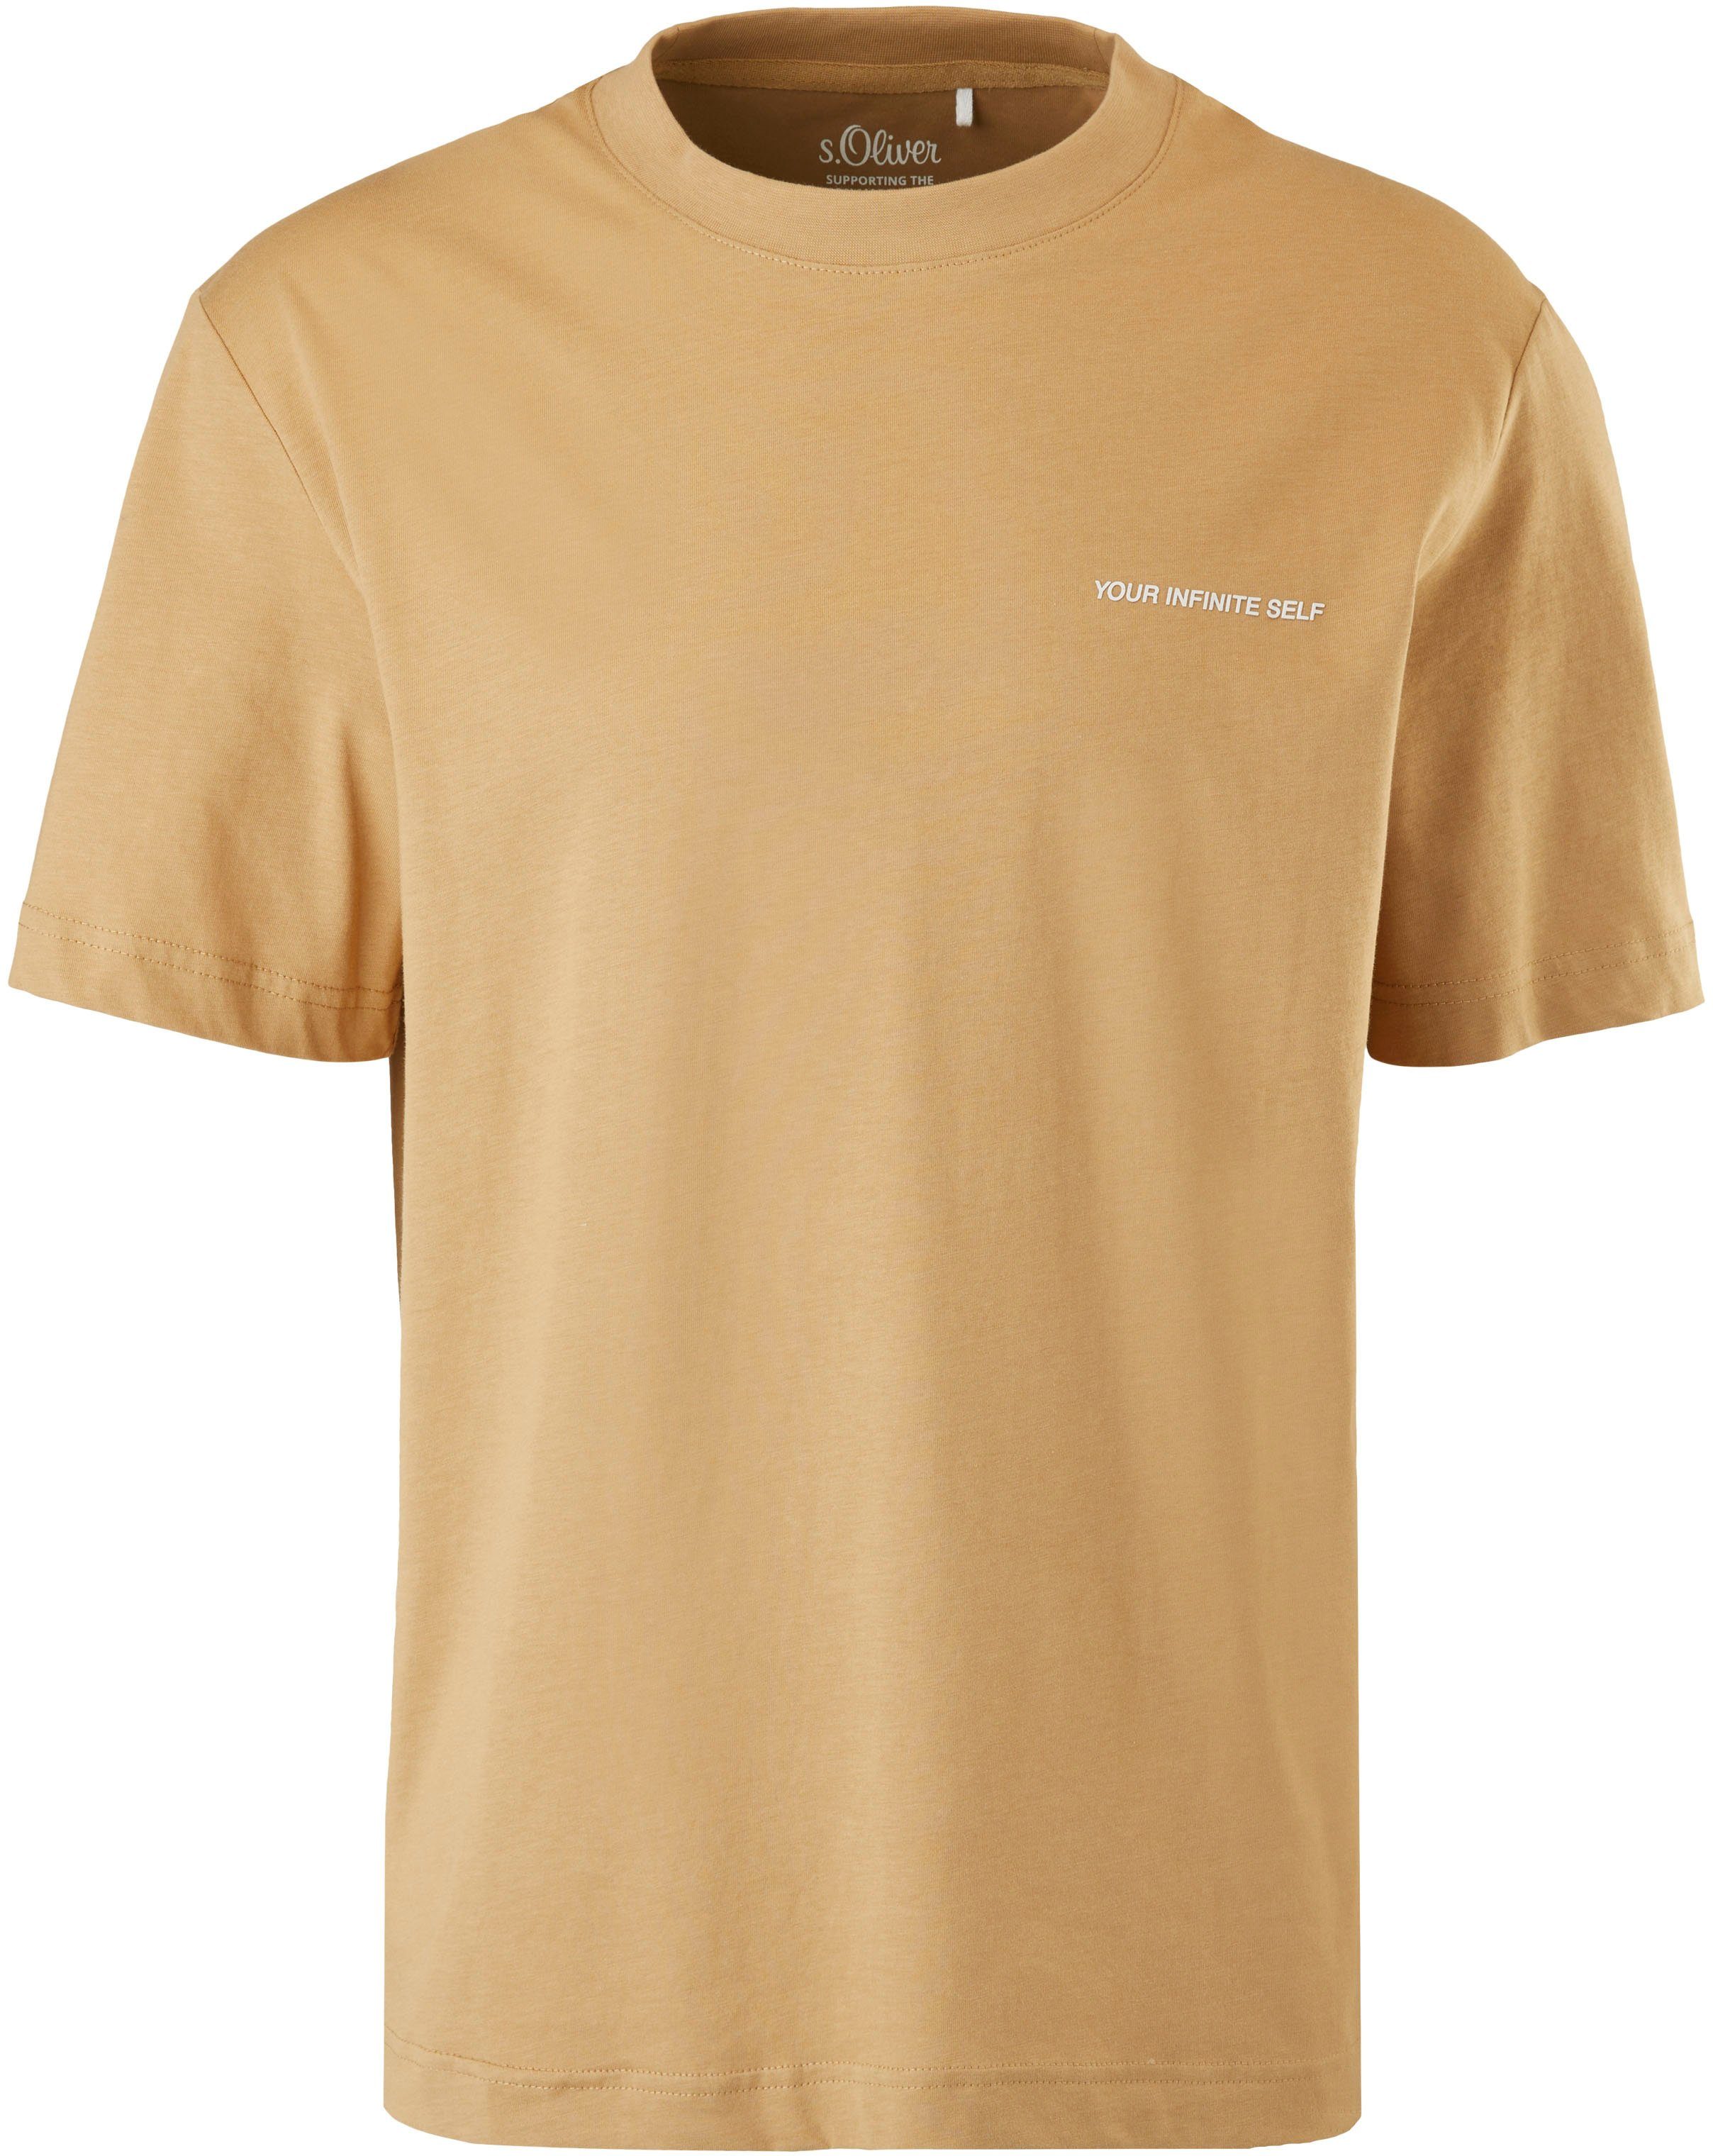 sandstein T-Shirt s.Oliver